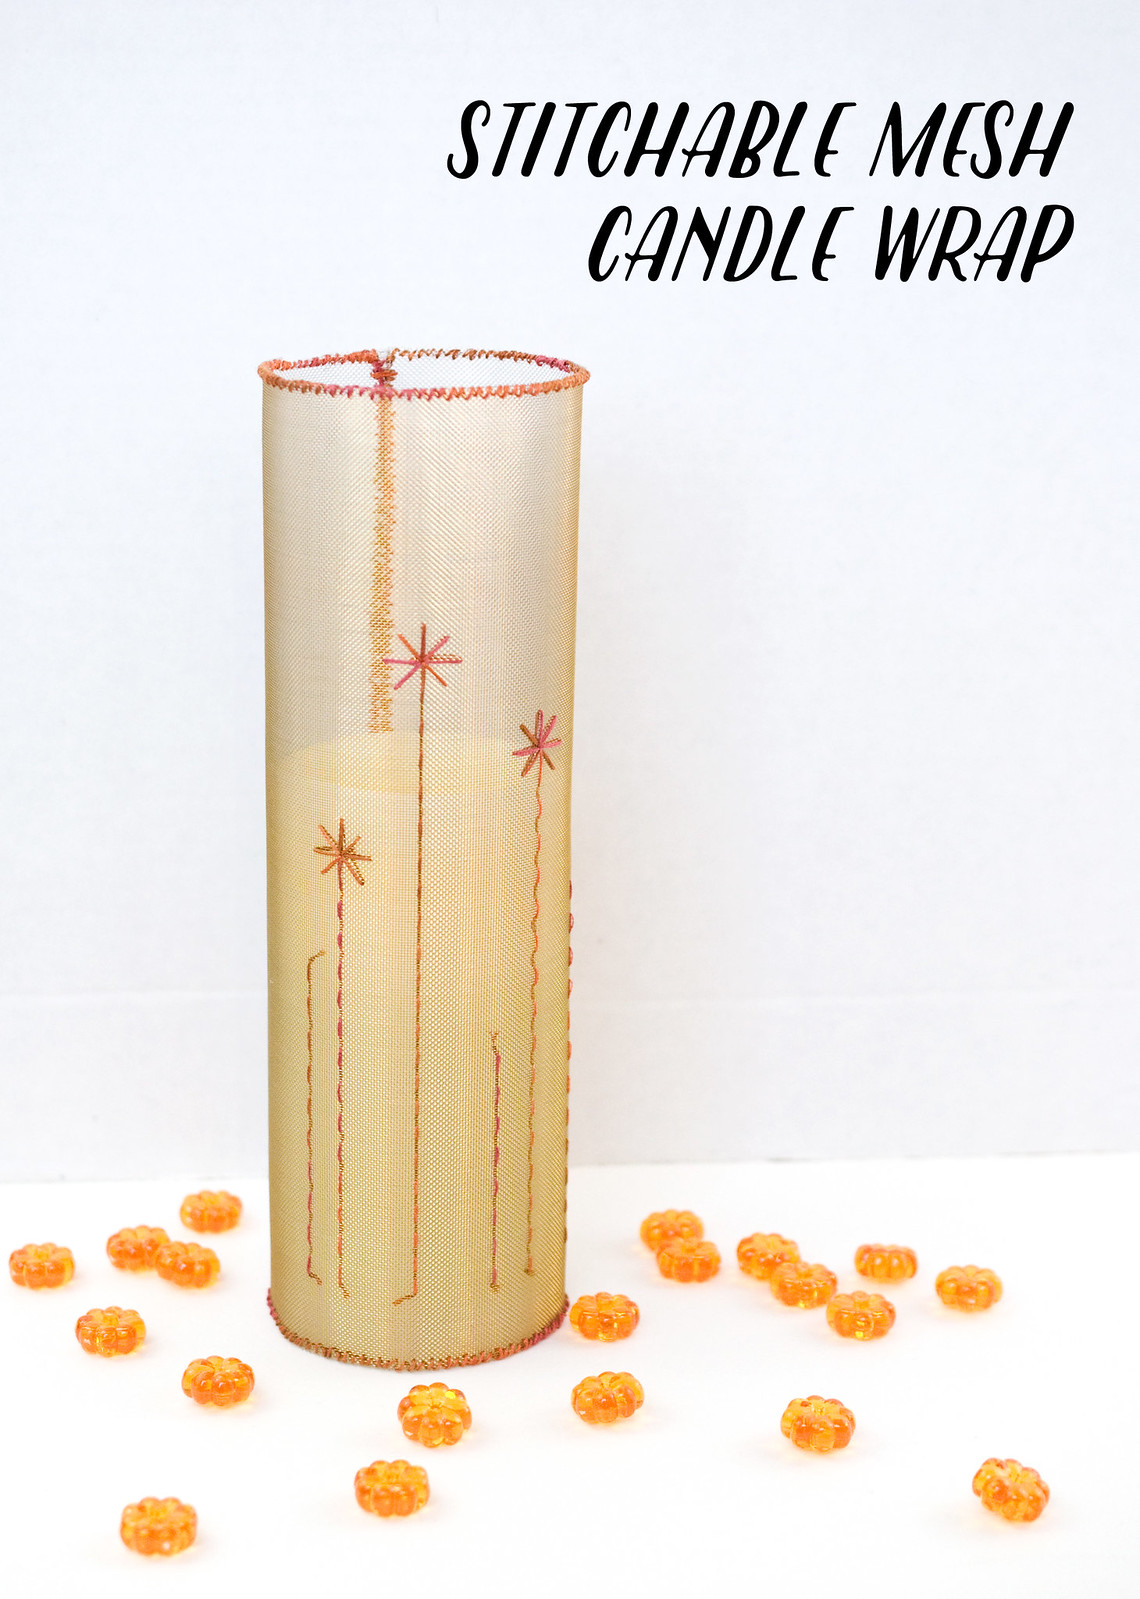 Stitchable Mesh Candle Wrap